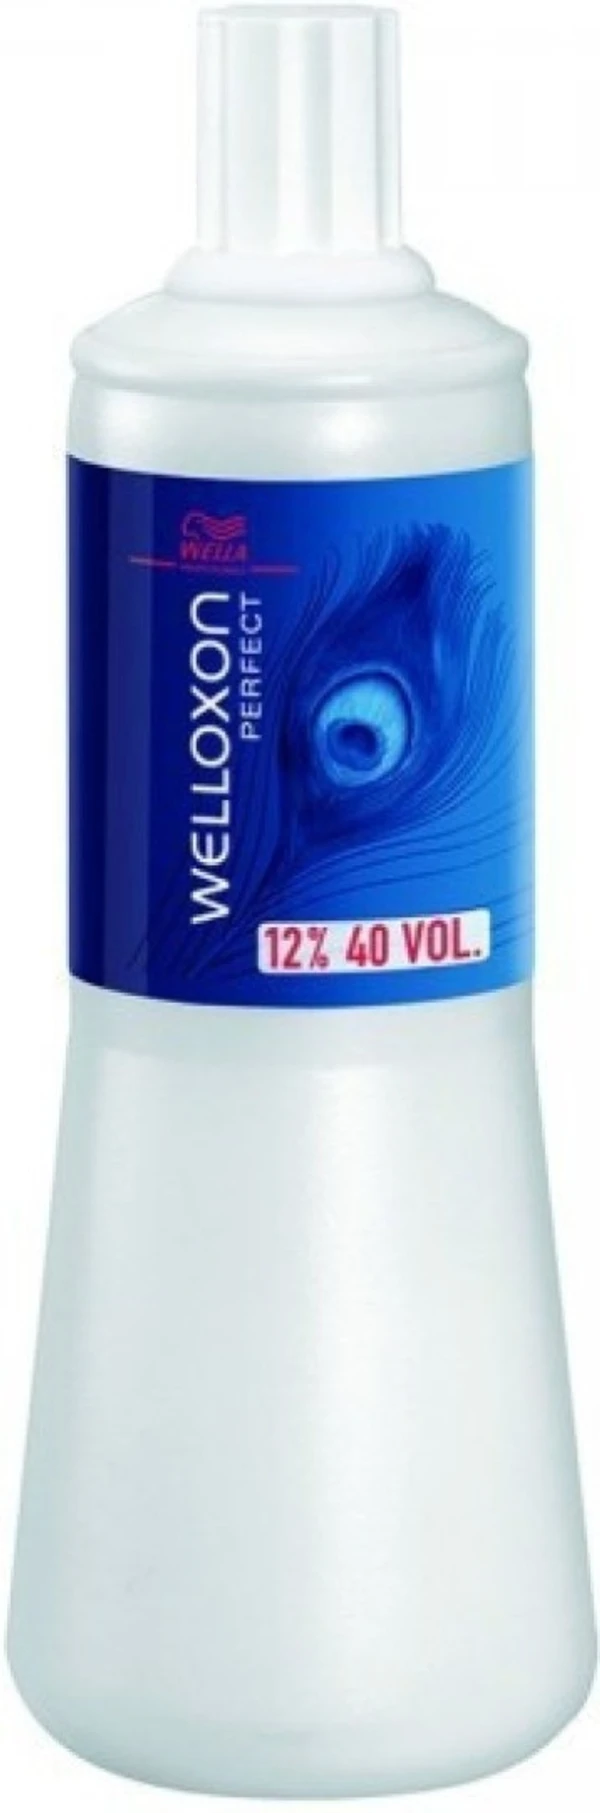 Wella Professionals Welloxon Perfect  12% 40 Vol Cream Developer (1000ml)